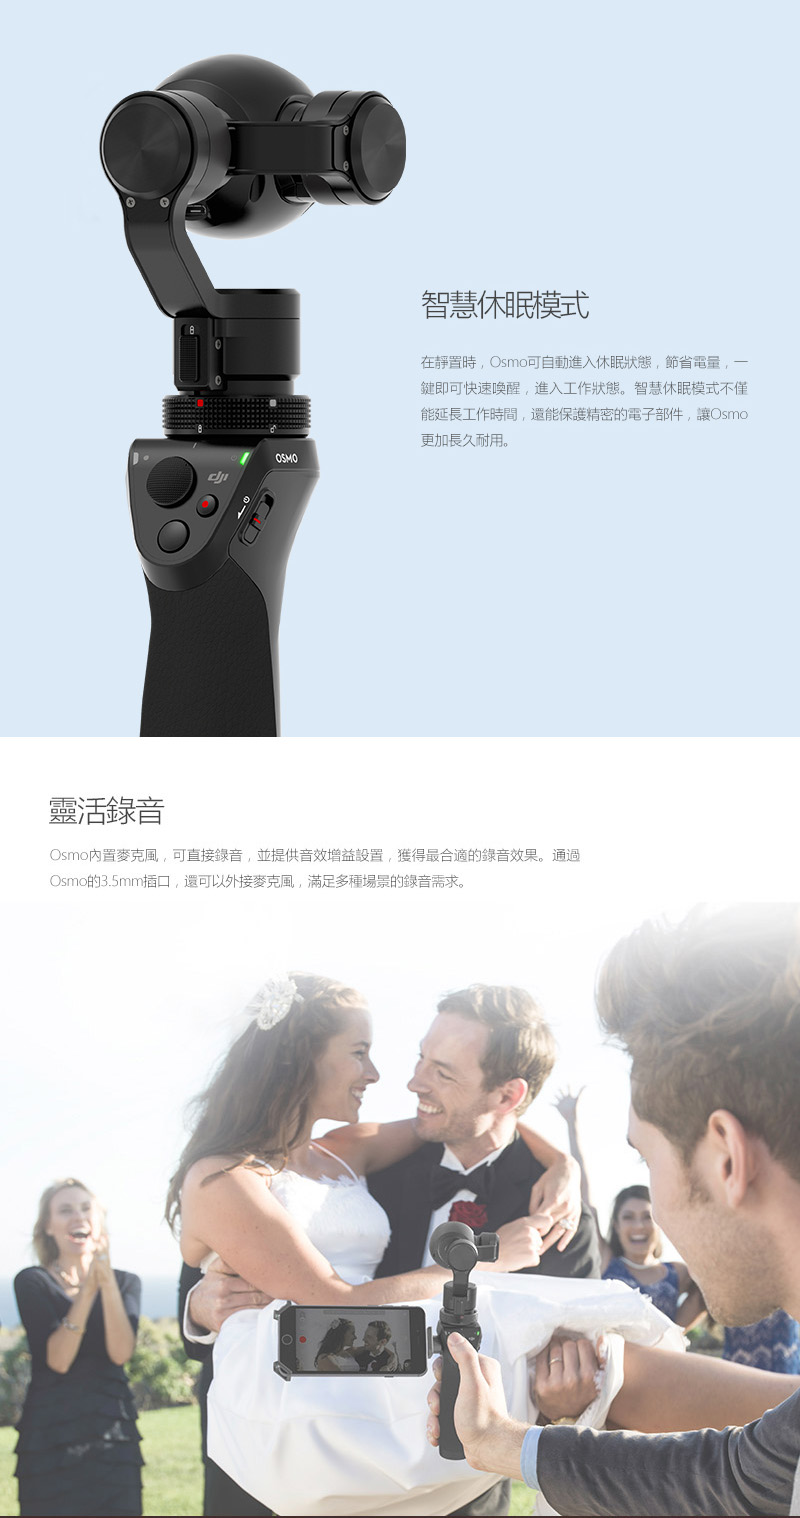  DJI OSMO 4K高清三軸穩定器雲台相機 功能3- Outlet Express HK生活百貨城